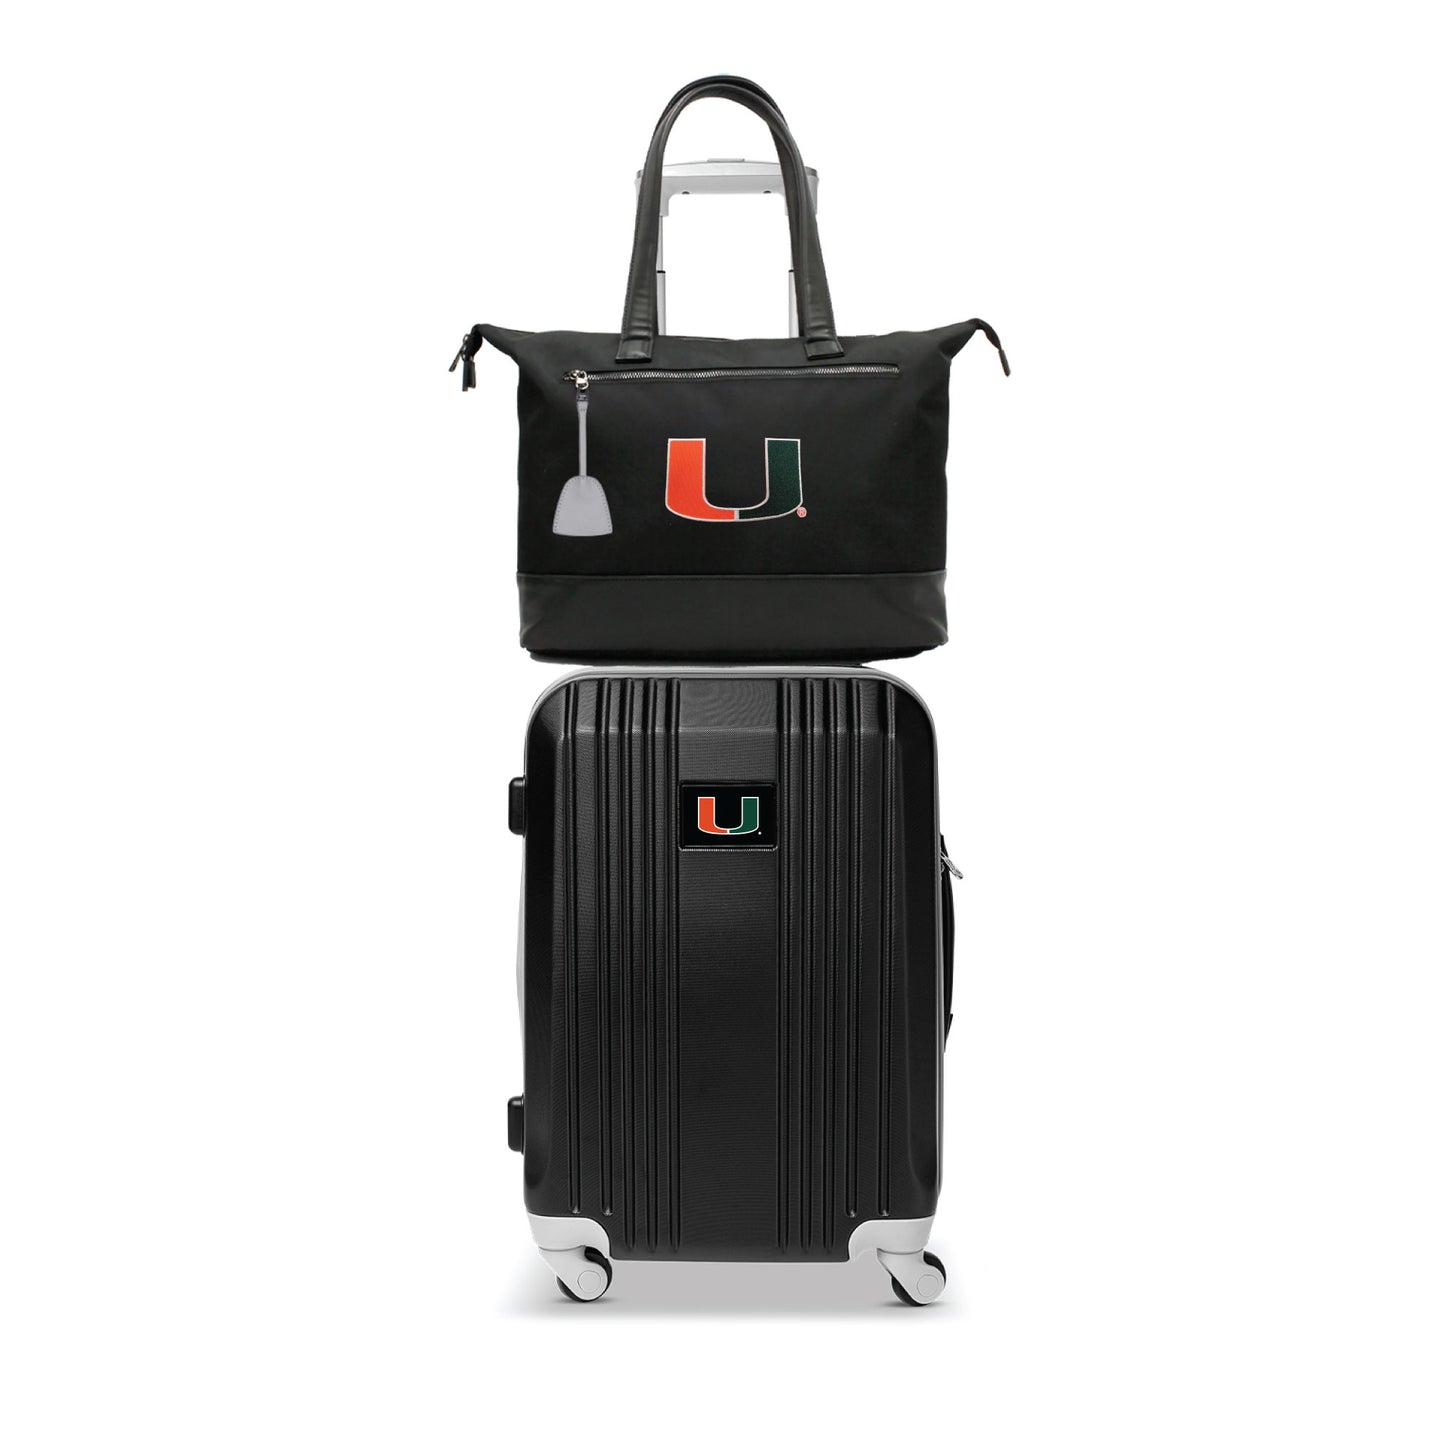 Miami Hurricanes Premium Laptop Tote Bag and Luggage Set